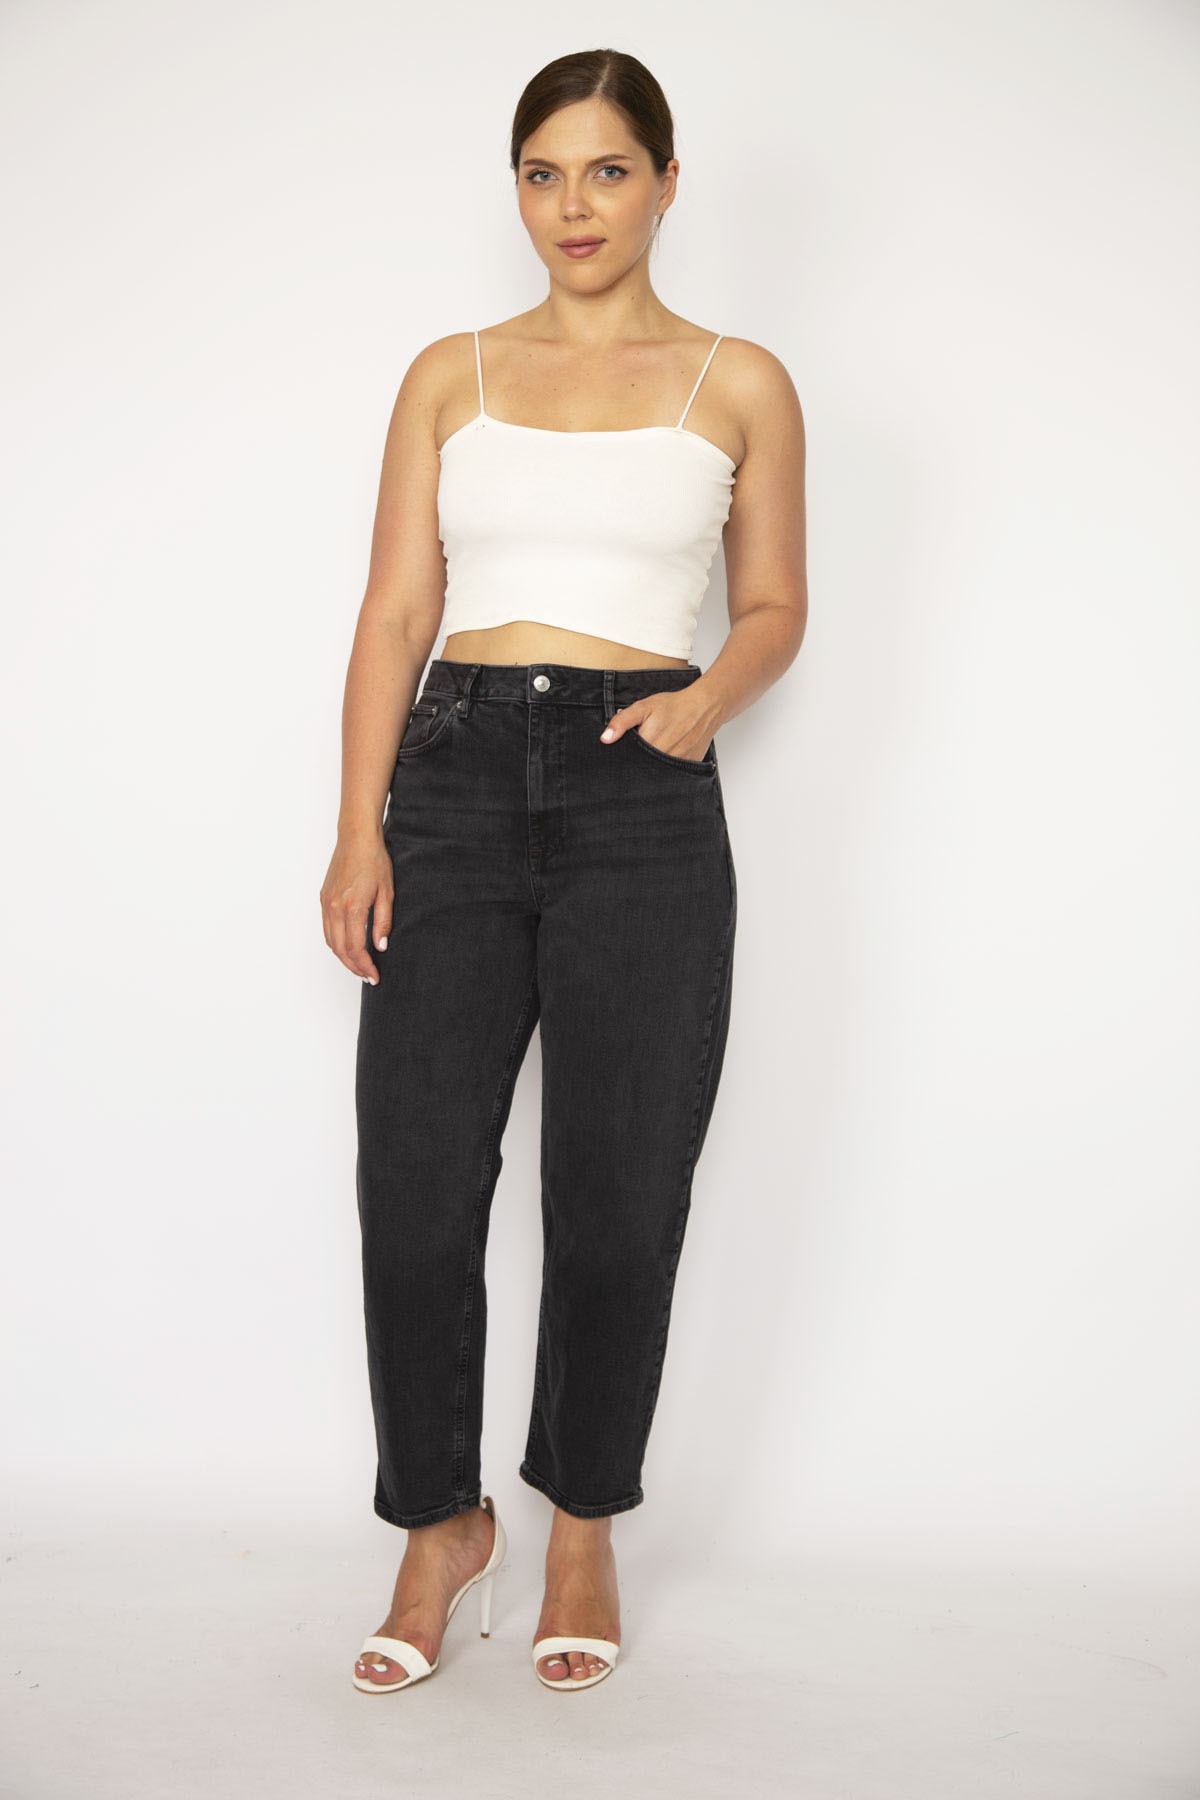 Şans Women's Plus Size Anthracite 5-Pocket Lycra Jeans